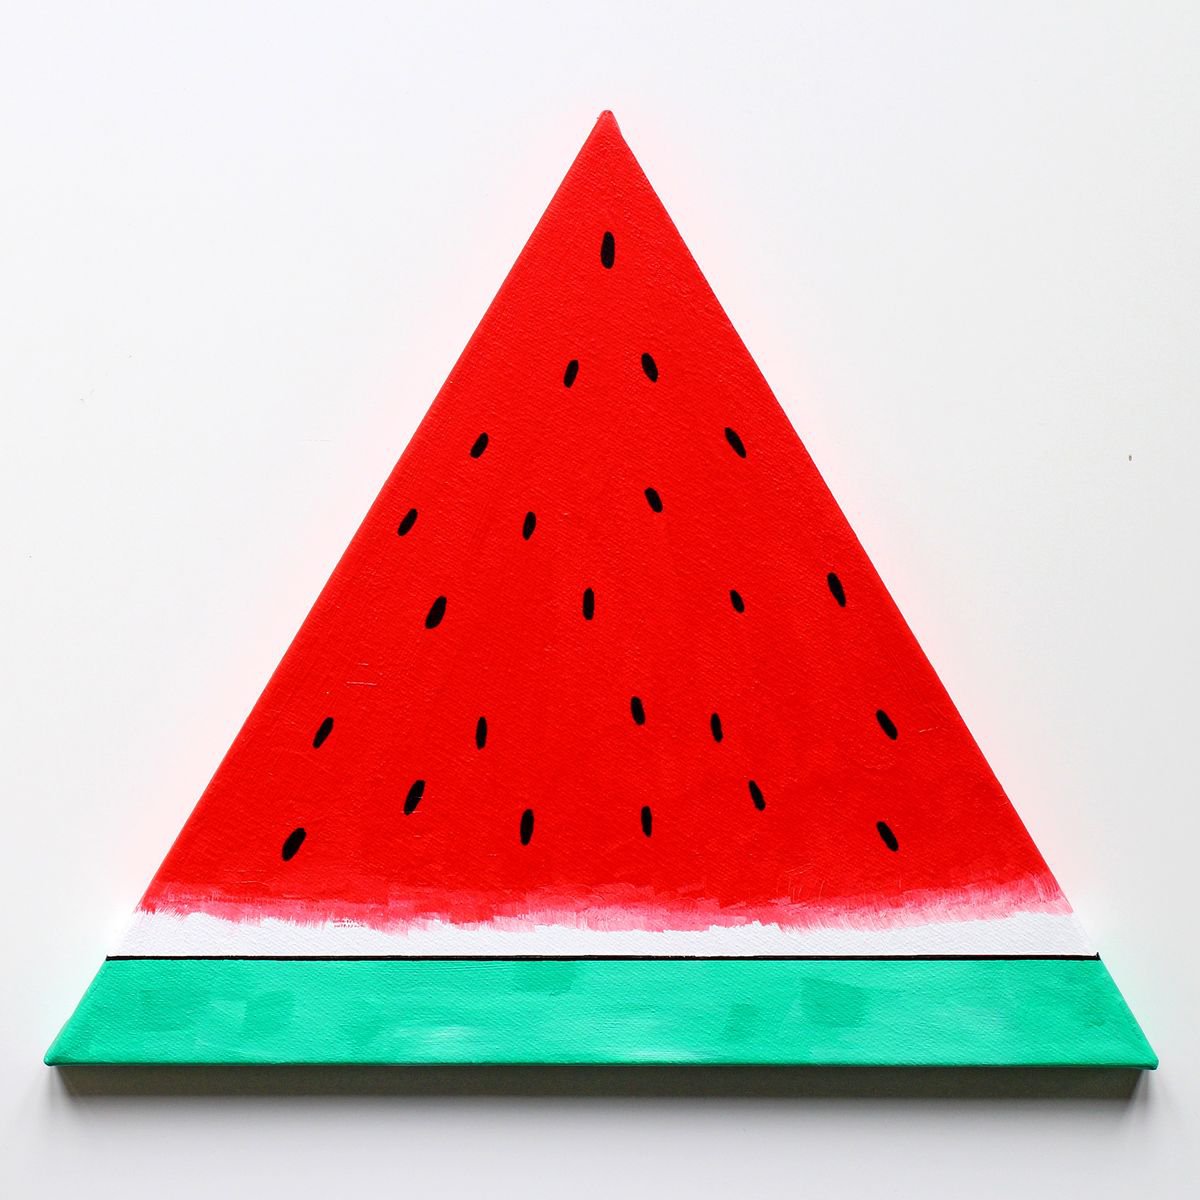 Watermelon Segment Pop Art Acrylic Painting On TRIANGLE Canvas by Ian Viggars